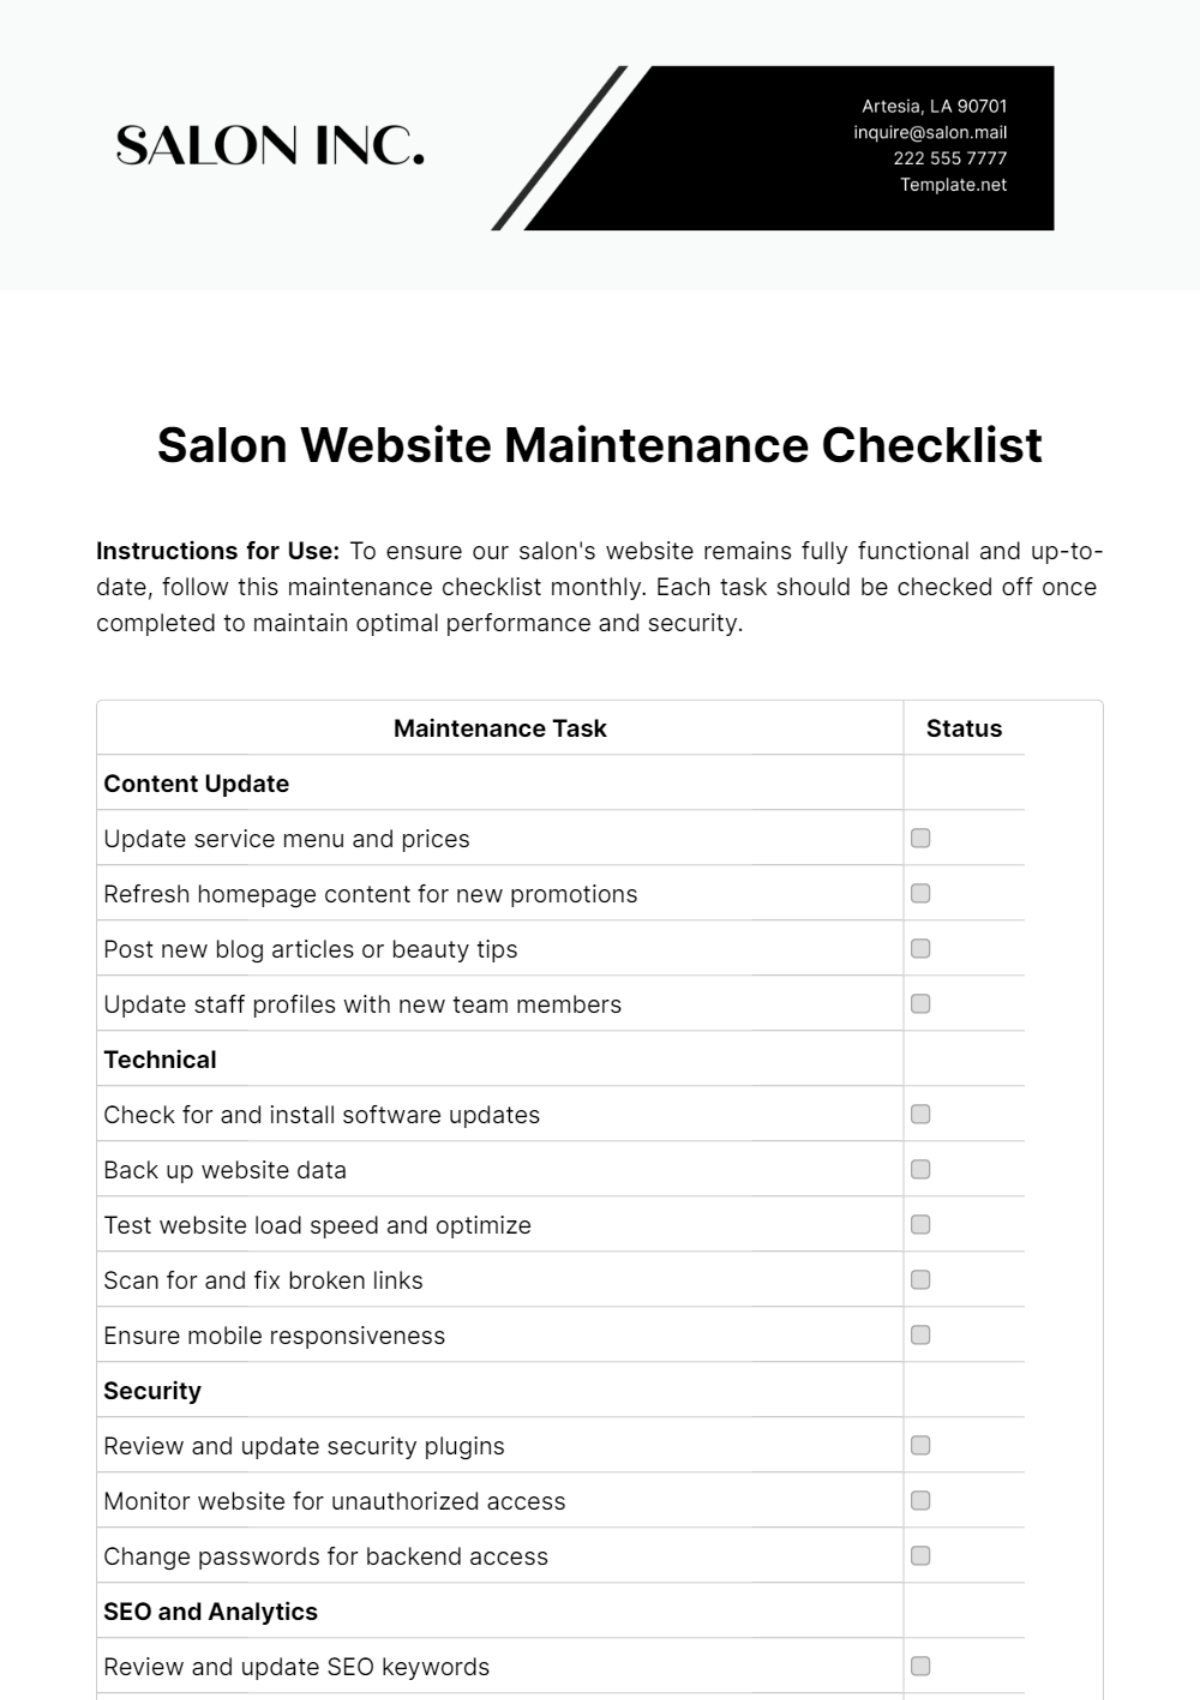 Salon Website Maintenance Checklist Template